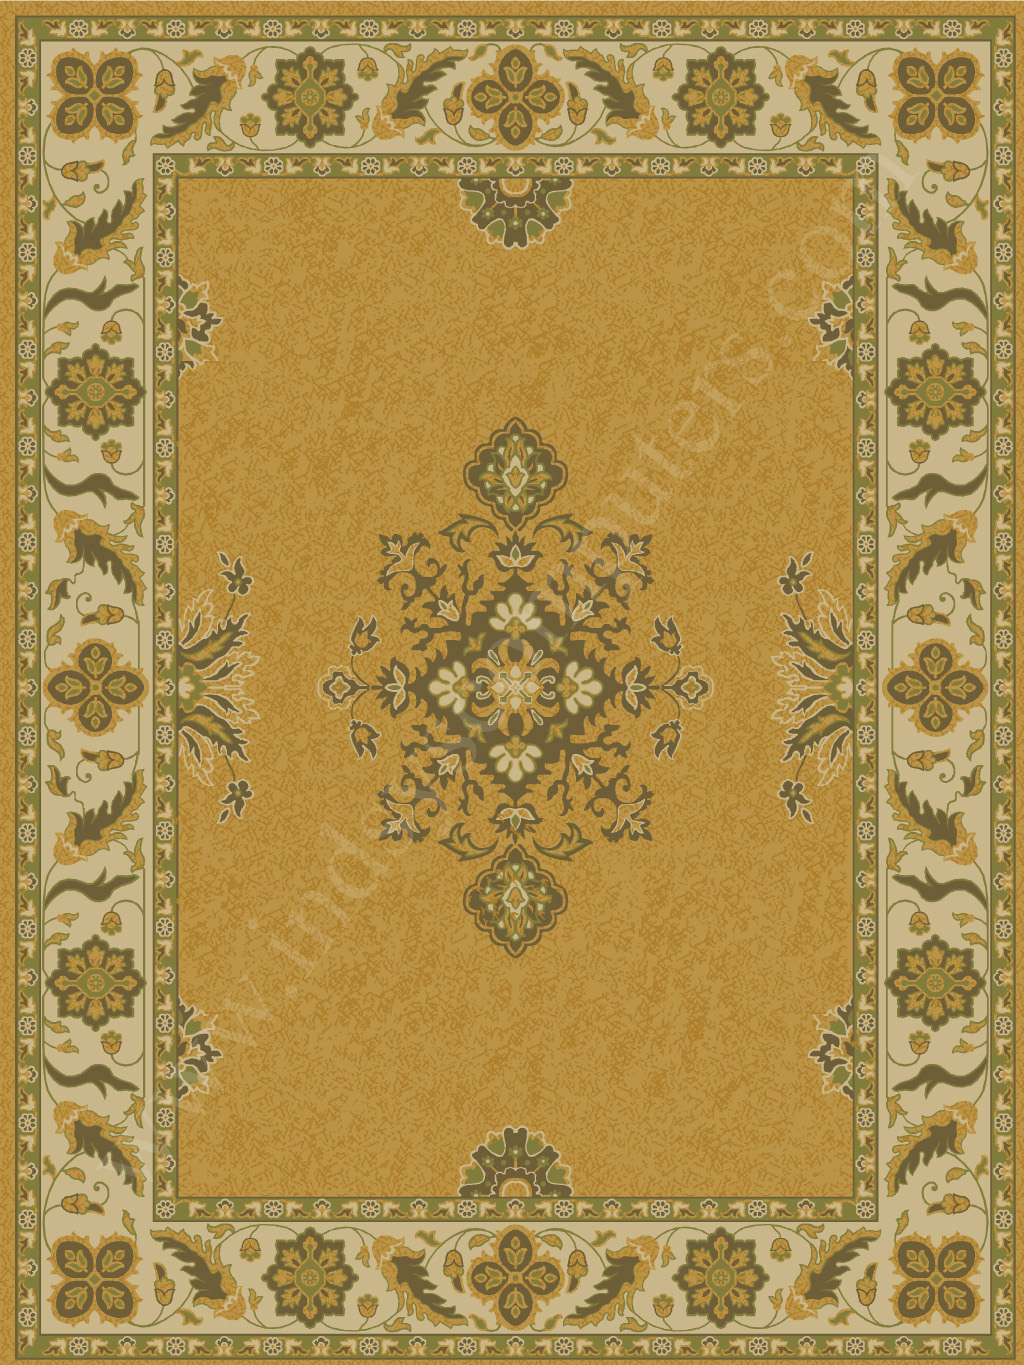 carpet design unique carpet designs to consider for living room floor NLYNETG